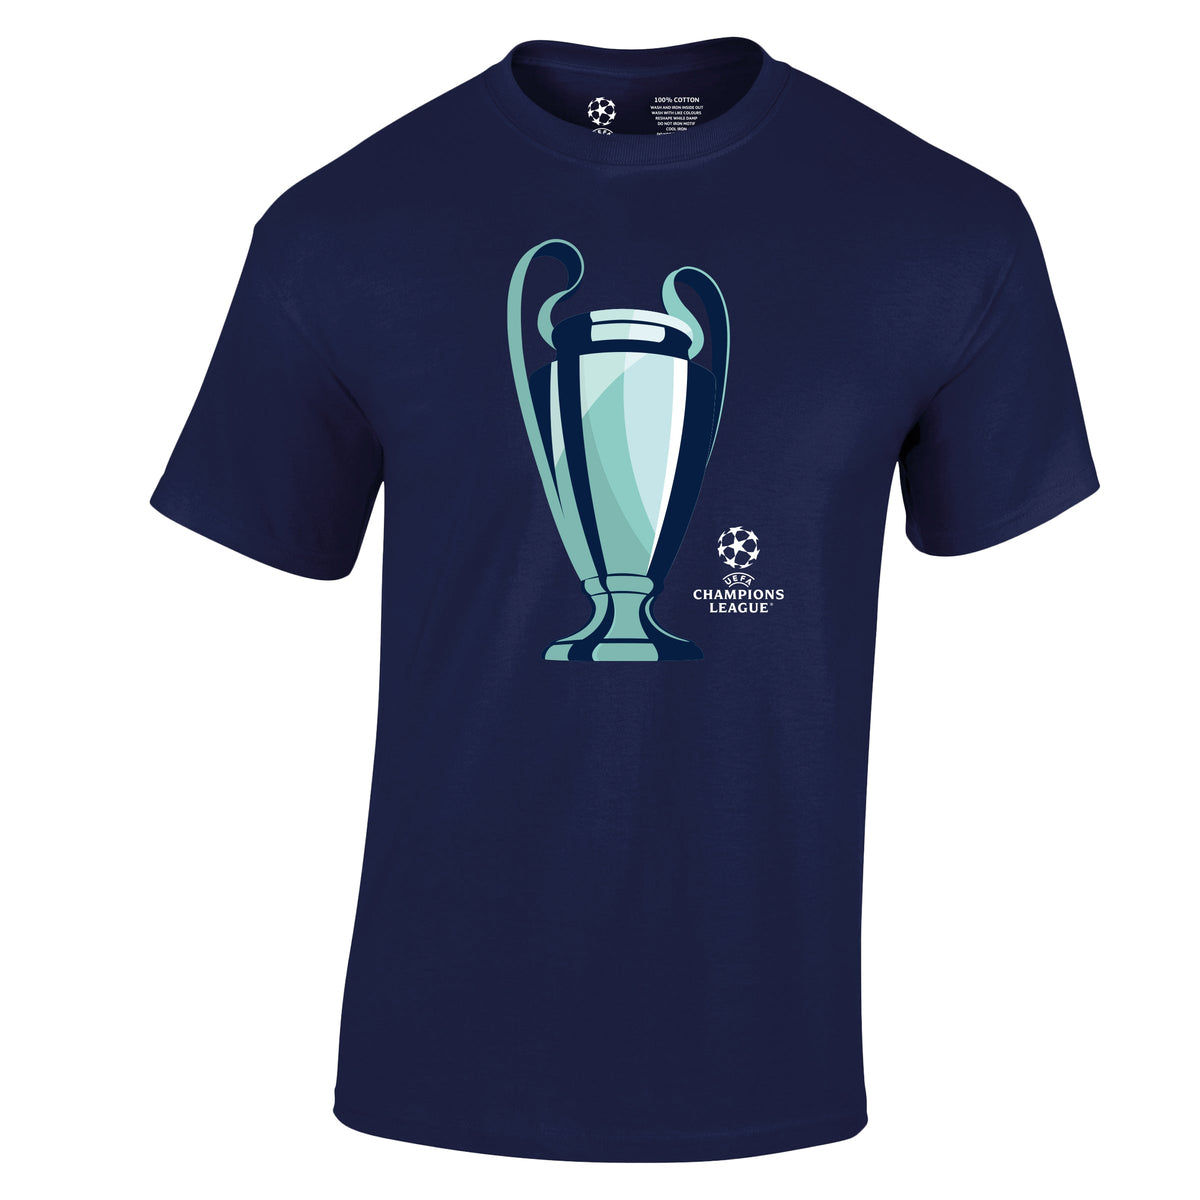 Champions League Trophy T-Shirt Navy